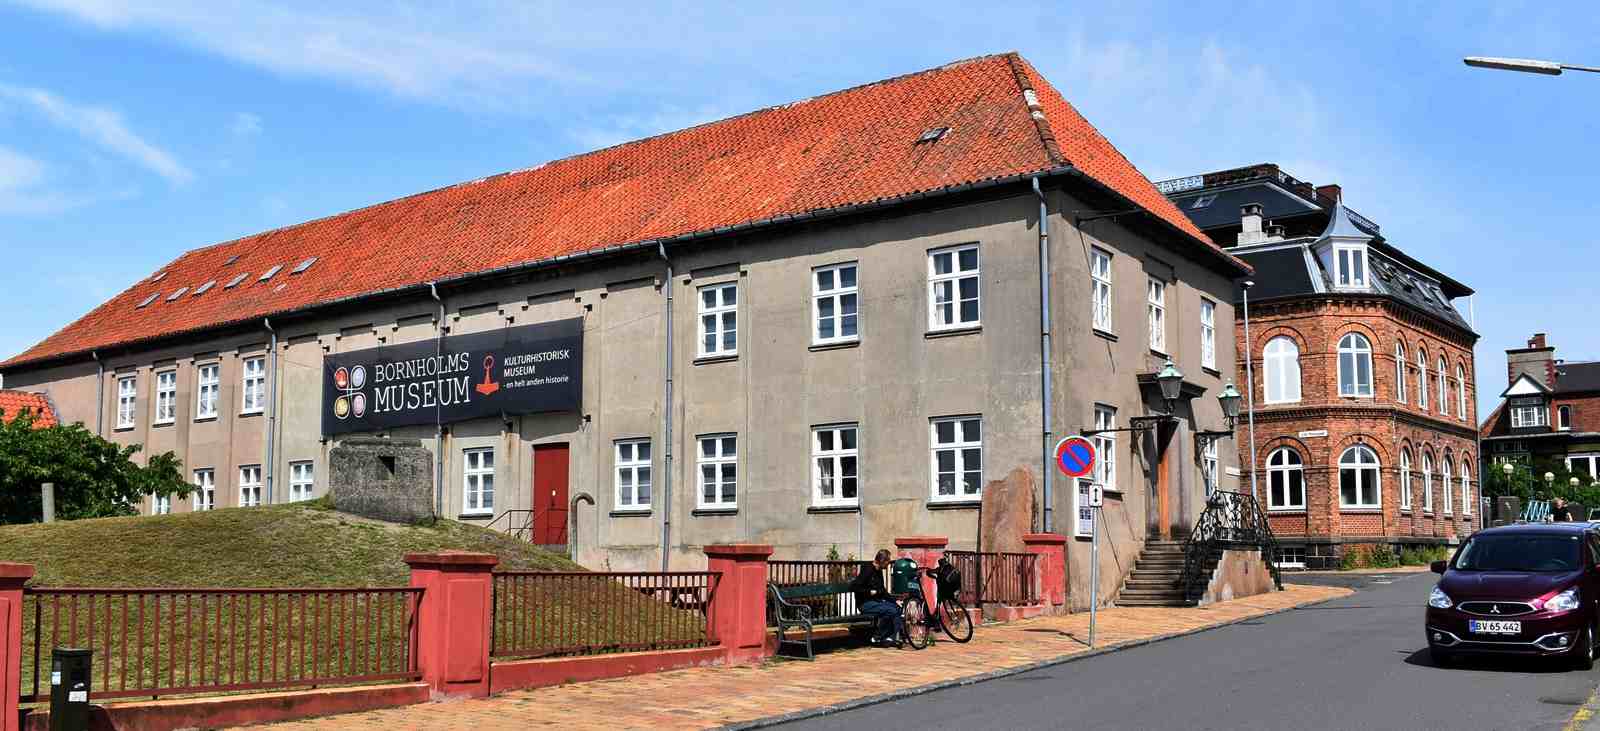 Bornholms Muzeum, Bornholm